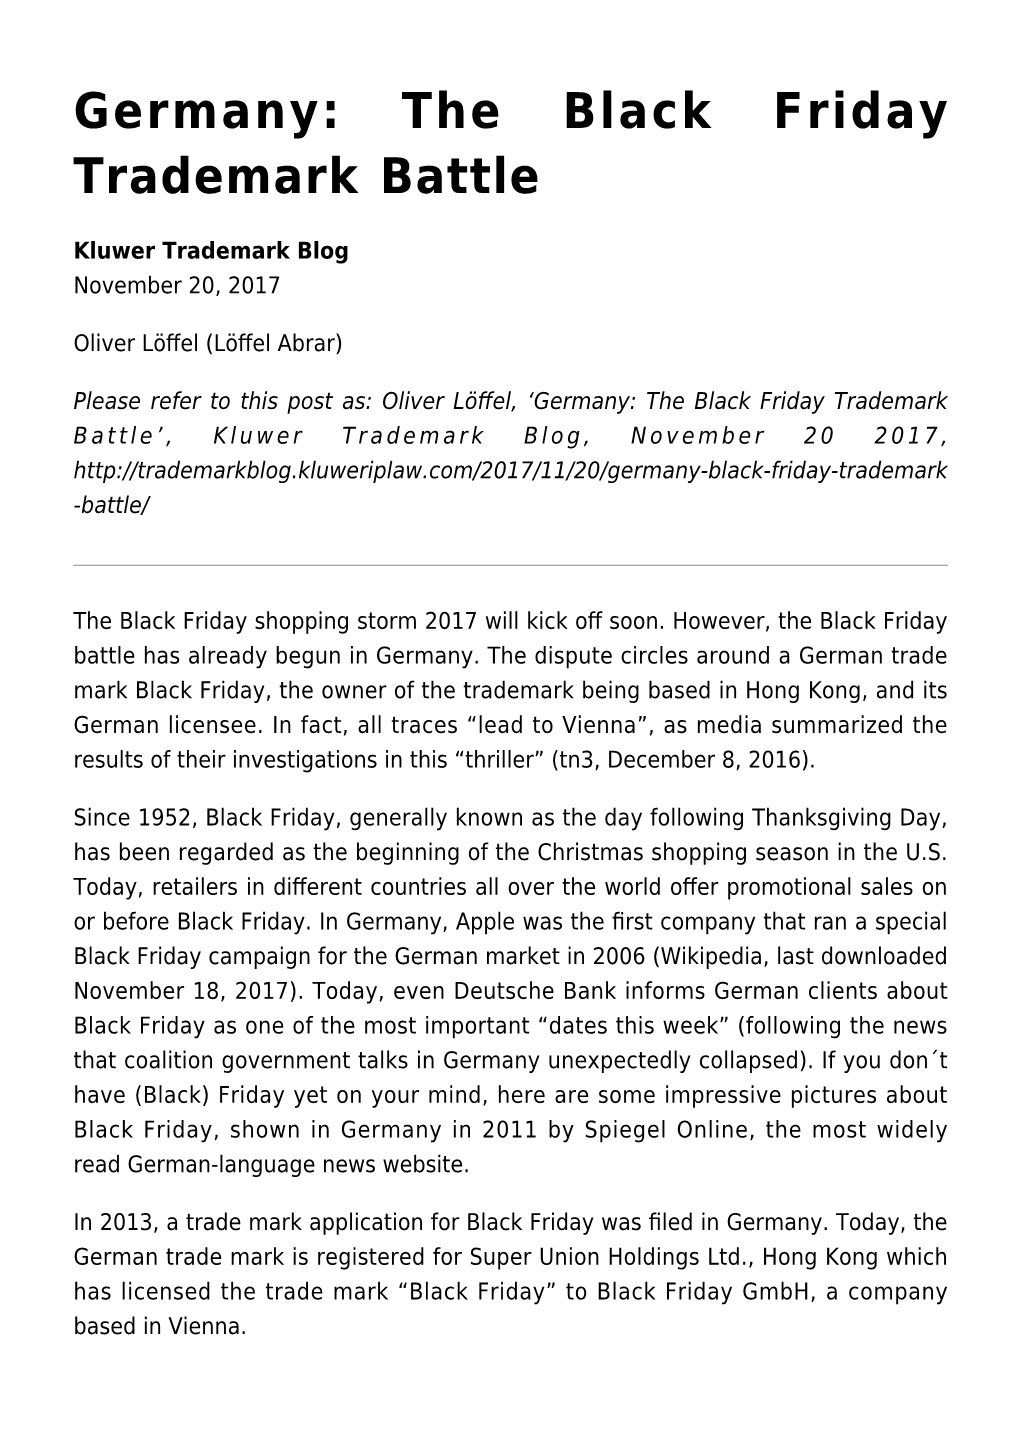 Germany: the Black Friday Trademark Battle